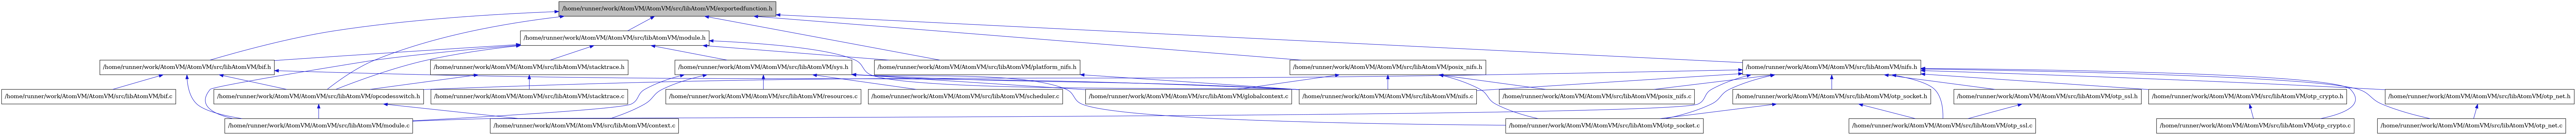 digraph {
    graph [bgcolor="#00000000"]
    node [shape=rectangle style=filled fillcolor="#FFFFFF" font=Helvetica padding=2]
    edge [color="#1414CE"]
    "3" [label="/home/runner/work/AtomVM/AtomVM/src/libAtomVM/bif.c" tooltip="/home/runner/work/AtomVM/AtomVM/src/libAtomVM/bif.c"]
    "2" [label="/home/runner/work/AtomVM/AtomVM/src/libAtomVM/bif.h" tooltip="/home/runner/work/AtomVM/AtomVM/src/libAtomVM/bif.h"]
    "9" [label="/home/runner/work/AtomVM/AtomVM/src/libAtomVM/platform_nifs.h" tooltip="/home/runner/work/AtomVM/AtomVM/src/libAtomVM/platform_nifs.h"]
    "25" [label="/home/runner/work/AtomVM/AtomVM/src/libAtomVM/posix_nifs.c" tooltip="/home/runner/work/AtomVM/AtomVM/src/libAtomVM/posix_nifs.c"]
    "26" [label="/home/runner/work/AtomVM/AtomVM/src/libAtomVM/posix_nifs.h" tooltip="/home/runner/work/AtomVM/AtomVM/src/libAtomVM/posix_nifs.h"]
    "16" [label="/home/runner/work/AtomVM/AtomVM/src/libAtomVM/scheduler.c" tooltip="/home/runner/work/AtomVM/AtomVM/src/libAtomVM/scheduler.c"]
    "1" [label="/home/runner/work/AtomVM/AtomVM/src/libAtomVM/exportedfunction.h" tooltip="/home/runner/work/AtomVM/AtomVM/src/libAtomVM/exportedfunction.h" fillcolor="#BFBFBF"]
    "7" [label="/home/runner/work/AtomVM/AtomVM/src/libAtomVM/context.c" tooltip="/home/runner/work/AtomVM/AtomVM/src/libAtomVM/context.c"]
    "11" [label="/home/runner/work/AtomVM/AtomVM/src/libAtomVM/stacktrace.c" tooltip="/home/runner/work/AtomVM/AtomVM/src/libAtomVM/stacktrace.c"]
    "10" [label="/home/runner/work/AtomVM/AtomVM/src/libAtomVM/stacktrace.h" tooltip="/home/runner/work/AtomVM/AtomVM/src/libAtomVM/stacktrace.h"]
    "4" [label="/home/runner/work/AtomVM/AtomVM/src/libAtomVM/module.c" tooltip="/home/runner/work/AtomVM/AtomVM/src/libAtomVM/module.c"]
    "8" [label="/home/runner/work/AtomVM/AtomVM/src/libAtomVM/module.h" tooltip="/home/runner/work/AtomVM/AtomVM/src/libAtomVM/module.h"]
    "23" [label="/home/runner/work/AtomVM/AtomVM/src/libAtomVM/otp_ssl.c" tooltip="/home/runner/work/AtomVM/AtomVM/src/libAtomVM/otp_ssl.c"]
    "24" [label="/home/runner/work/AtomVM/AtomVM/src/libAtomVM/otp_ssl.h" tooltip="/home/runner/work/AtomVM/AtomVM/src/libAtomVM/otp_ssl.h"]
    "15" [label="/home/runner/work/AtomVM/AtomVM/src/libAtomVM/resources.c" tooltip="/home/runner/work/AtomVM/AtomVM/src/libAtomVM/resources.c"]
    "18" [label="/home/runner/work/AtomVM/AtomVM/src/libAtomVM/otp_crypto.c" tooltip="/home/runner/work/AtomVM/AtomVM/src/libAtomVM/otp_crypto.c"]
    "19" [label="/home/runner/work/AtomVM/AtomVM/src/libAtomVM/otp_crypto.h" tooltip="/home/runner/work/AtomVM/AtomVM/src/libAtomVM/otp_crypto.h"]
    "20" [label="/home/runner/work/AtomVM/AtomVM/src/libAtomVM/otp_net.c" tooltip="/home/runner/work/AtomVM/AtomVM/src/libAtomVM/otp_net.c"]
    "21" [label="/home/runner/work/AtomVM/AtomVM/src/libAtomVM/otp_net.h" tooltip="/home/runner/work/AtomVM/AtomVM/src/libAtomVM/otp_net.h"]
    "12" [label="/home/runner/work/AtomVM/AtomVM/src/libAtomVM/sys.h" tooltip="/home/runner/work/AtomVM/AtomVM/src/libAtomVM/sys.h"]
    "5" [label="/home/runner/work/AtomVM/AtomVM/src/libAtomVM/nifs.c" tooltip="/home/runner/work/AtomVM/AtomVM/src/libAtomVM/nifs.c"]
    "17" [label="/home/runner/work/AtomVM/AtomVM/src/libAtomVM/nifs.h" tooltip="/home/runner/work/AtomVM/AtomVM/src/libAtomVM/nifs.h"]
    "6" [label="/home/runner/work/AtomVM/AtomVM/src/libAtomVM/opcodesswitch.h" tooltip="/home/runner/work/AtomVM/AtomVM/src/libAtomVM/opcodesswitch.h"]
    "13" [label="/home/runner/work/AtomVM/AtomVM/src/libAtomVM/globalcontext.c" tooltip="/home/runner/work/AtomVM/AtomVM/src/libAtomVM/globalcontext.c"]
    "14" [label="/home/runner/work/AtomVM/AtomVM/src/libAtomVM/otp_socket.c" tooltip="/home/runner/work/AtomVM/AtomVM/src/libAtomVM/otp_socket.c"]
    "22" [label="/home/runner/work/AtomVM/AtomVM/src/libAtomVM/otp_socket.h" tooltip="/home/runner/work/AtomVM/AtomVM/src/libAtomVM/otp_socket.h"]
    "2" -> "3" [dir=back tooltip="include"]
    "2" -> "4" [dir=back tooltip="include"]
    "2" -> "5" [dir=back tooltip="include"]
    "2" -> "6" [dir=back tooltip="include"]
    "9" -> "5" [dir=back tooltip="include"]
    "26" -> "13" [dir=back tooltip="include"]
    "26" -> "5" [dir=back tooltip="include"]
    "26" -> "14" [dir=back tooltip="include"]
    "26" -> "25" [dir=back tooltip="include"]
    "1" -> "2" [dir=back tooltip="include"]
    "1" -> "8" [dir=back tooltip="include"]
    "1" -> "17" [dir=back tooltip="include"]
    "1" -> "6" [dir=back tooltip="include"]
    "1" -> "9" [dir=back tooltip="include"]
    "1" -> "26" [dir=back tooltip="include"]
    "10" -> "6" [dir=back tooltip="include"]
    "10" -> "11" [dir=back tooltip="include"]
    "8" -> "2" [dir=back tooltip="include"]
    "8" -> "4" [dir=back tooltip="include"]
    "8" -> "5" [dir=back tooltip="include"]
    "8" -> "6" [dir=back tooltip="include"]
    "8" -> "9" [dir=back tooltip="include"]
    "8" -> "10" [dir=back tooltip="include"]
    "8" -> "12" [dir=back tooltip="include"]
    "24" -> "23" [dir=back tooltip="include"]
    "19" -> "18" [dir=back tooltip="include"]
    "21" -> "20" [dir=back tooltip="include"]
    "12" -> "7" [dir=back tooltip="include"]
    "12" -> "13" [dir=back tooltip="include"]
    "12" -> "4" [dir=back tooltip="include"]
    "12" -> "5" [dir=back tooltip="include"]
    "12" -> "14" [dir=back tooltip="include"]
    "12" -> "15" [dir=back tooltip="include"]
    "12" -> "16" [dir=back tooltip="include"]
    "17" -> "4" [dir=back tooltip="include"]
    "17" -> "5" [dir=back tooltip="include"]
    "17" -> "6" [dir=back tooltip="include"]
    "17" -> "18" [dir=back tooltip="include"]
    "17" -> "19" [dir=back tooltip="include"]
    "17" -> "20" [dir=back tooltip="include"]
    "17" -> "21" [dir=back tooltip="include"]
    "17" -> "14" [dir=back tooltip="include"]
    "17" -> "22" [dir=back tooltip="include"]
    "17" -> "23" [dir=back tooltip="include"]
    "17" -> "24" [dir=back tooltip="include"]
    "17" -> "25" [dir=back tooltip="include"]
    "6" -> "7" [dir=back tooltip="include"]
    "6" -> "4" [dir=back tooltip="include"]
    "22" -> "14" [dir=back tooltip="include"]
    "22" -> "23" [dir=back tooltip="include"]
}